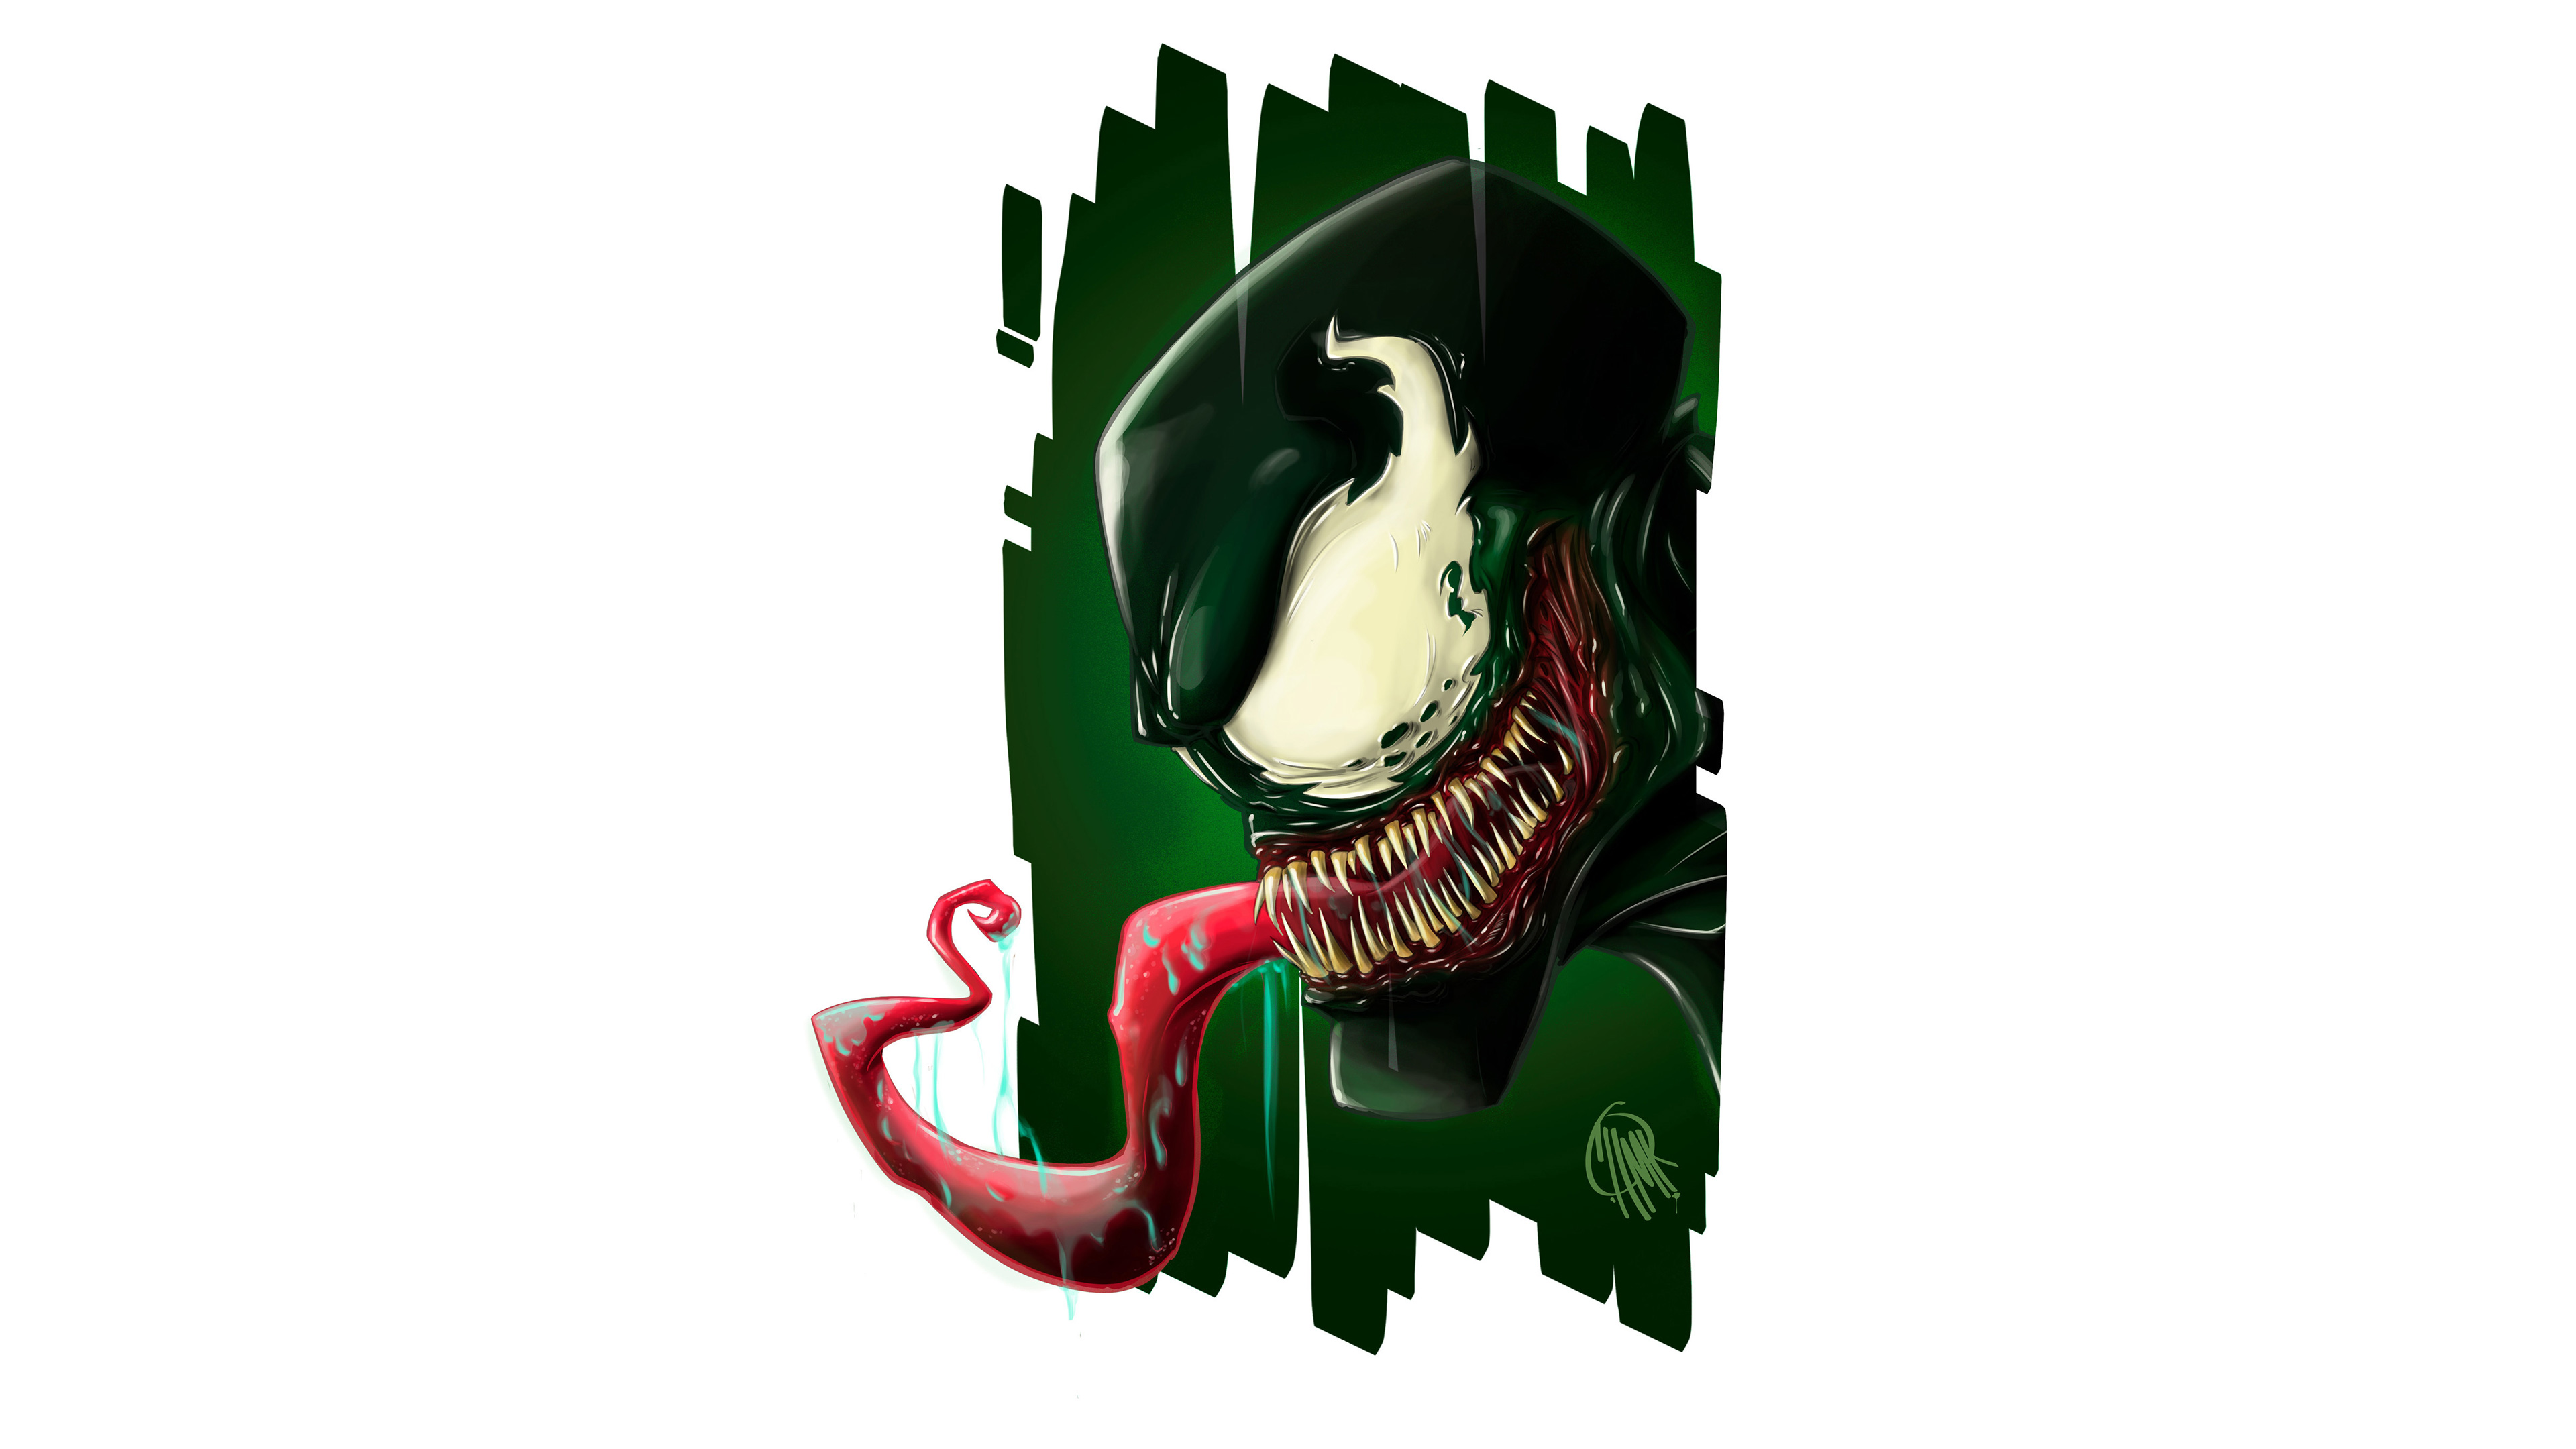 Venom 4k Art, HD Superheroes, 4k Wallpaper, Image, Background, Photo and Picture